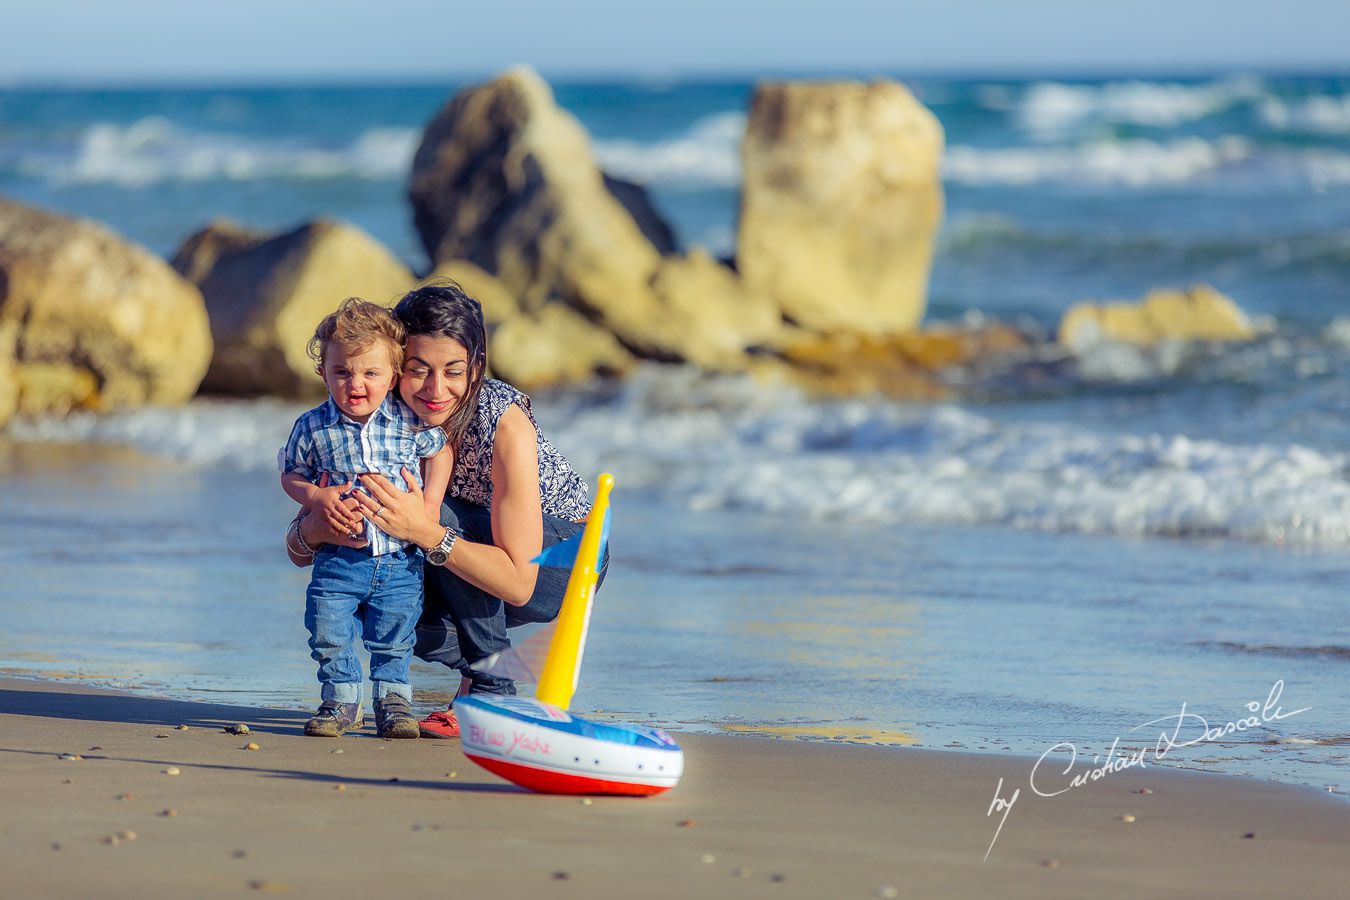 Precious moments: Maria & little Harry at Curium Beach, Cyprus. Photographer: Cristian Dascalu